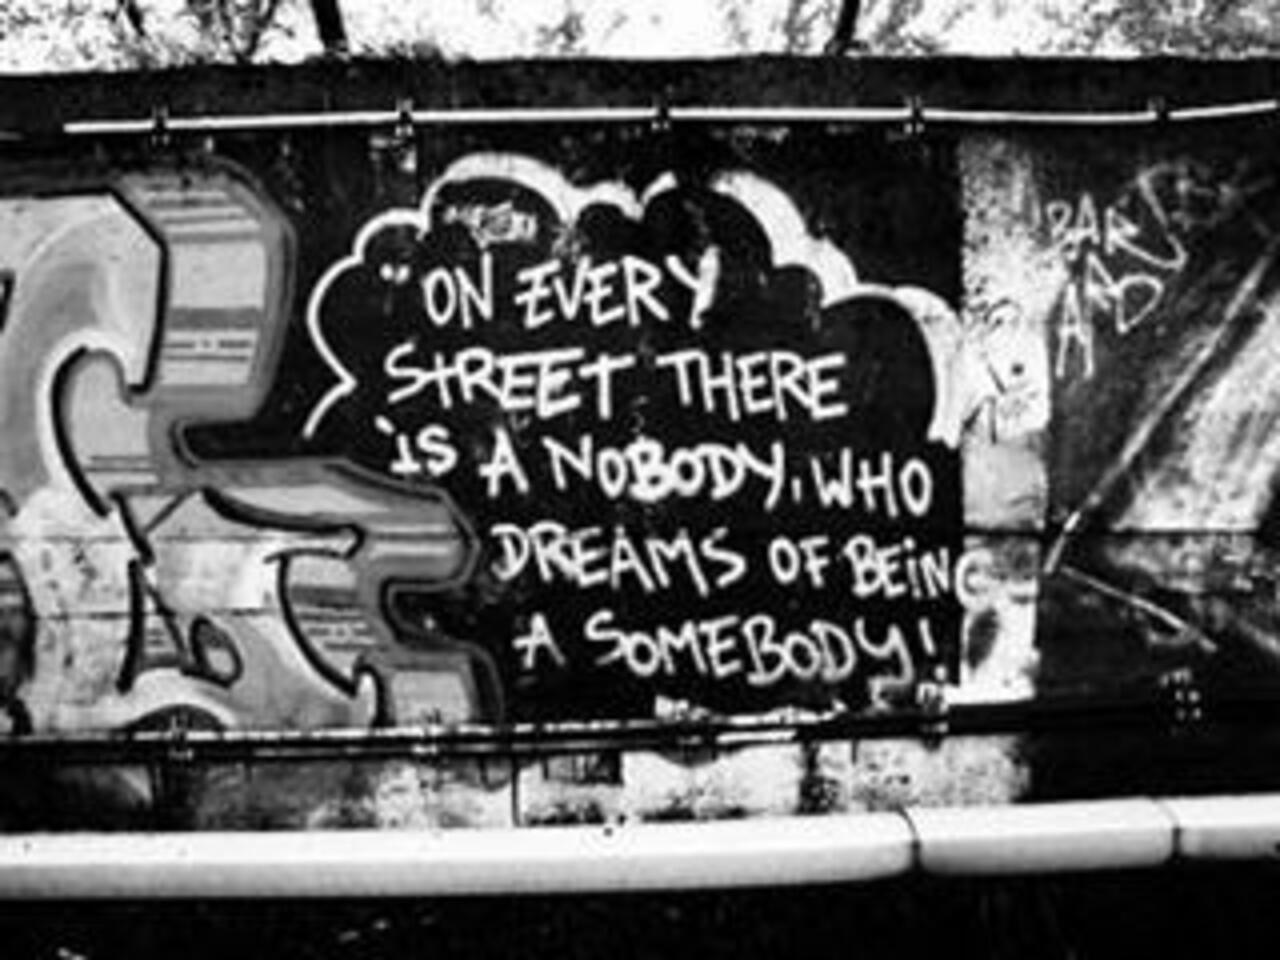 #Graffiti #Graff #Art #StreetArt #WallArt #HipHop #Culture #Tagging #GraffLife http://t.co/J5RVMo2ffA